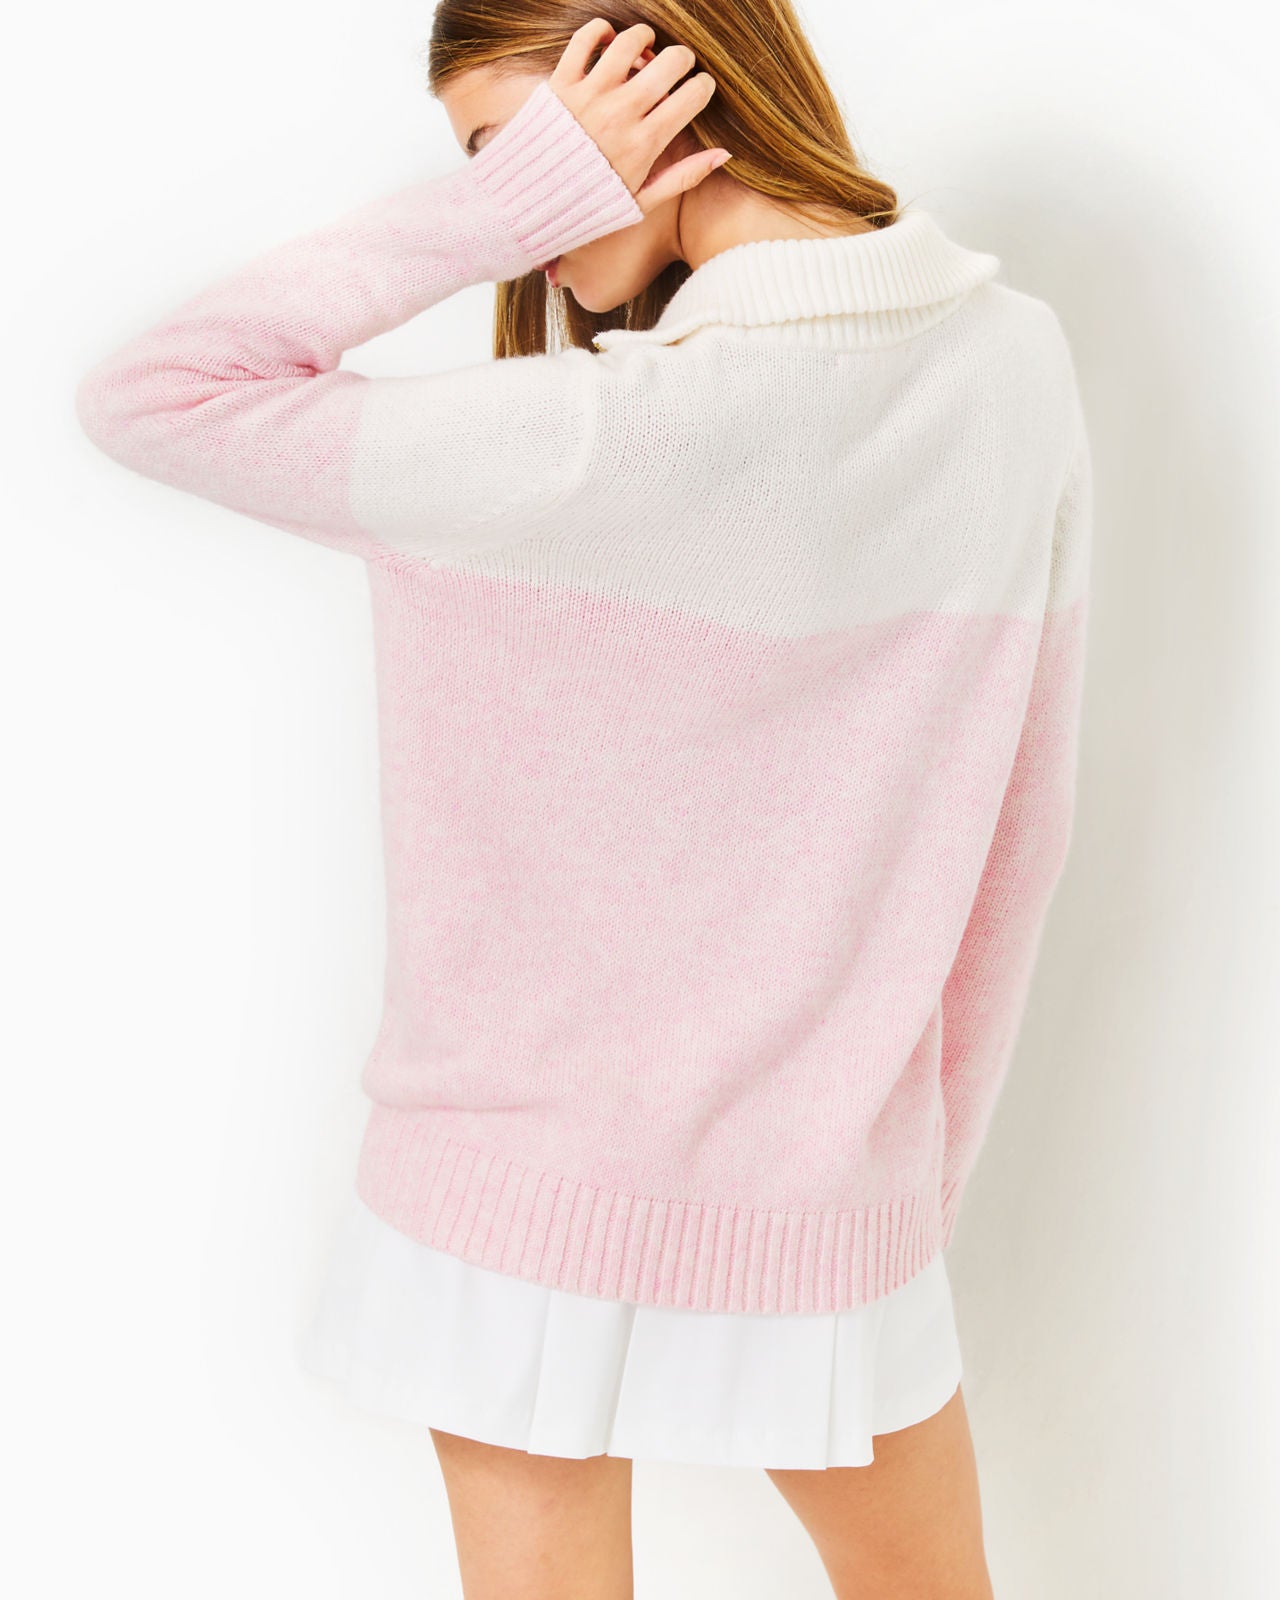 Dorset Sweater